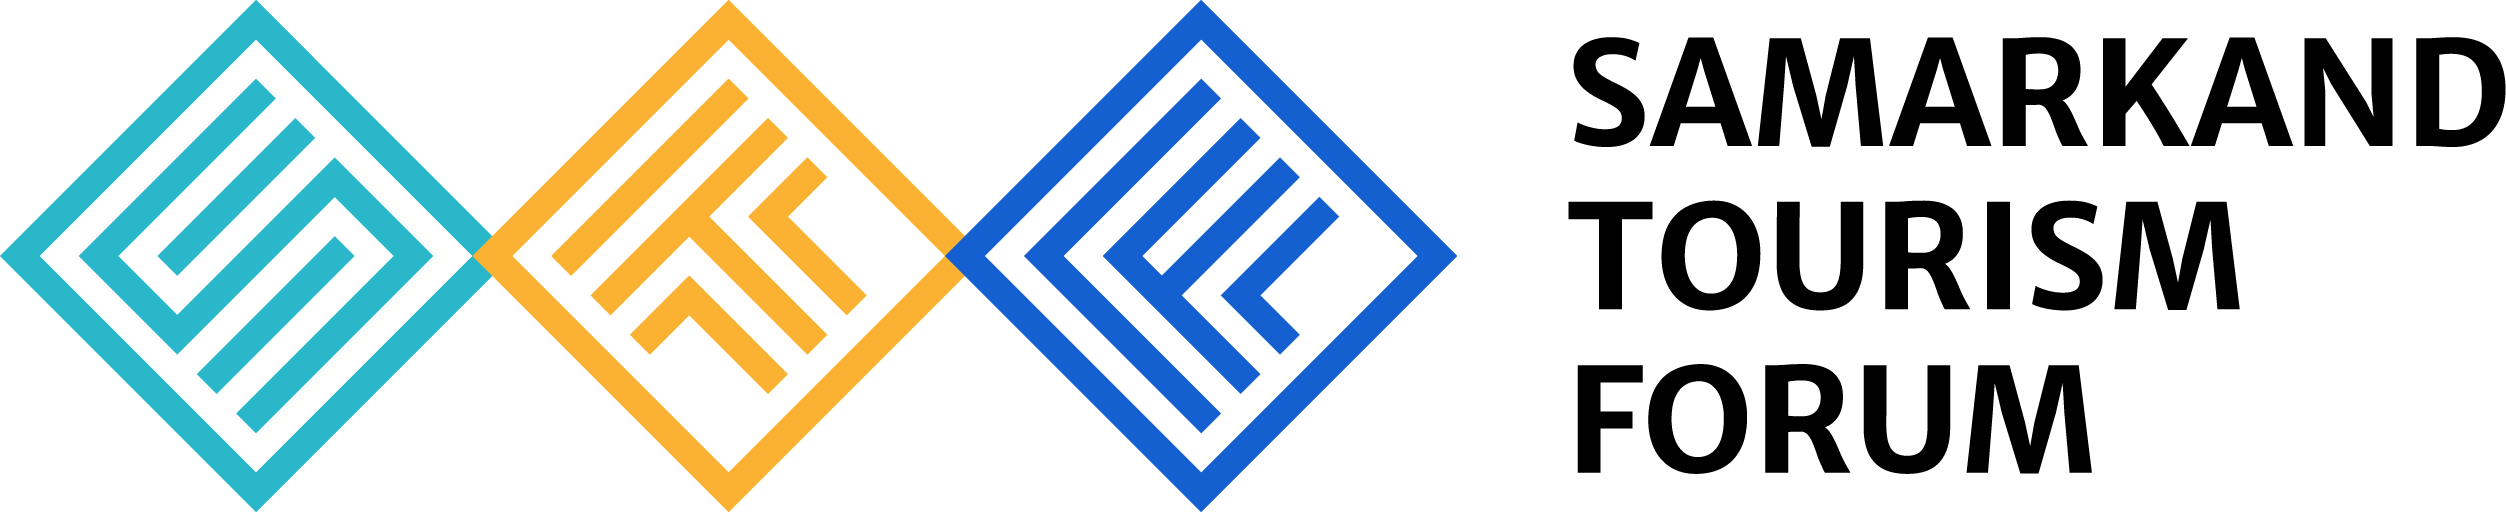 Samarkand Tourism Forum Logo